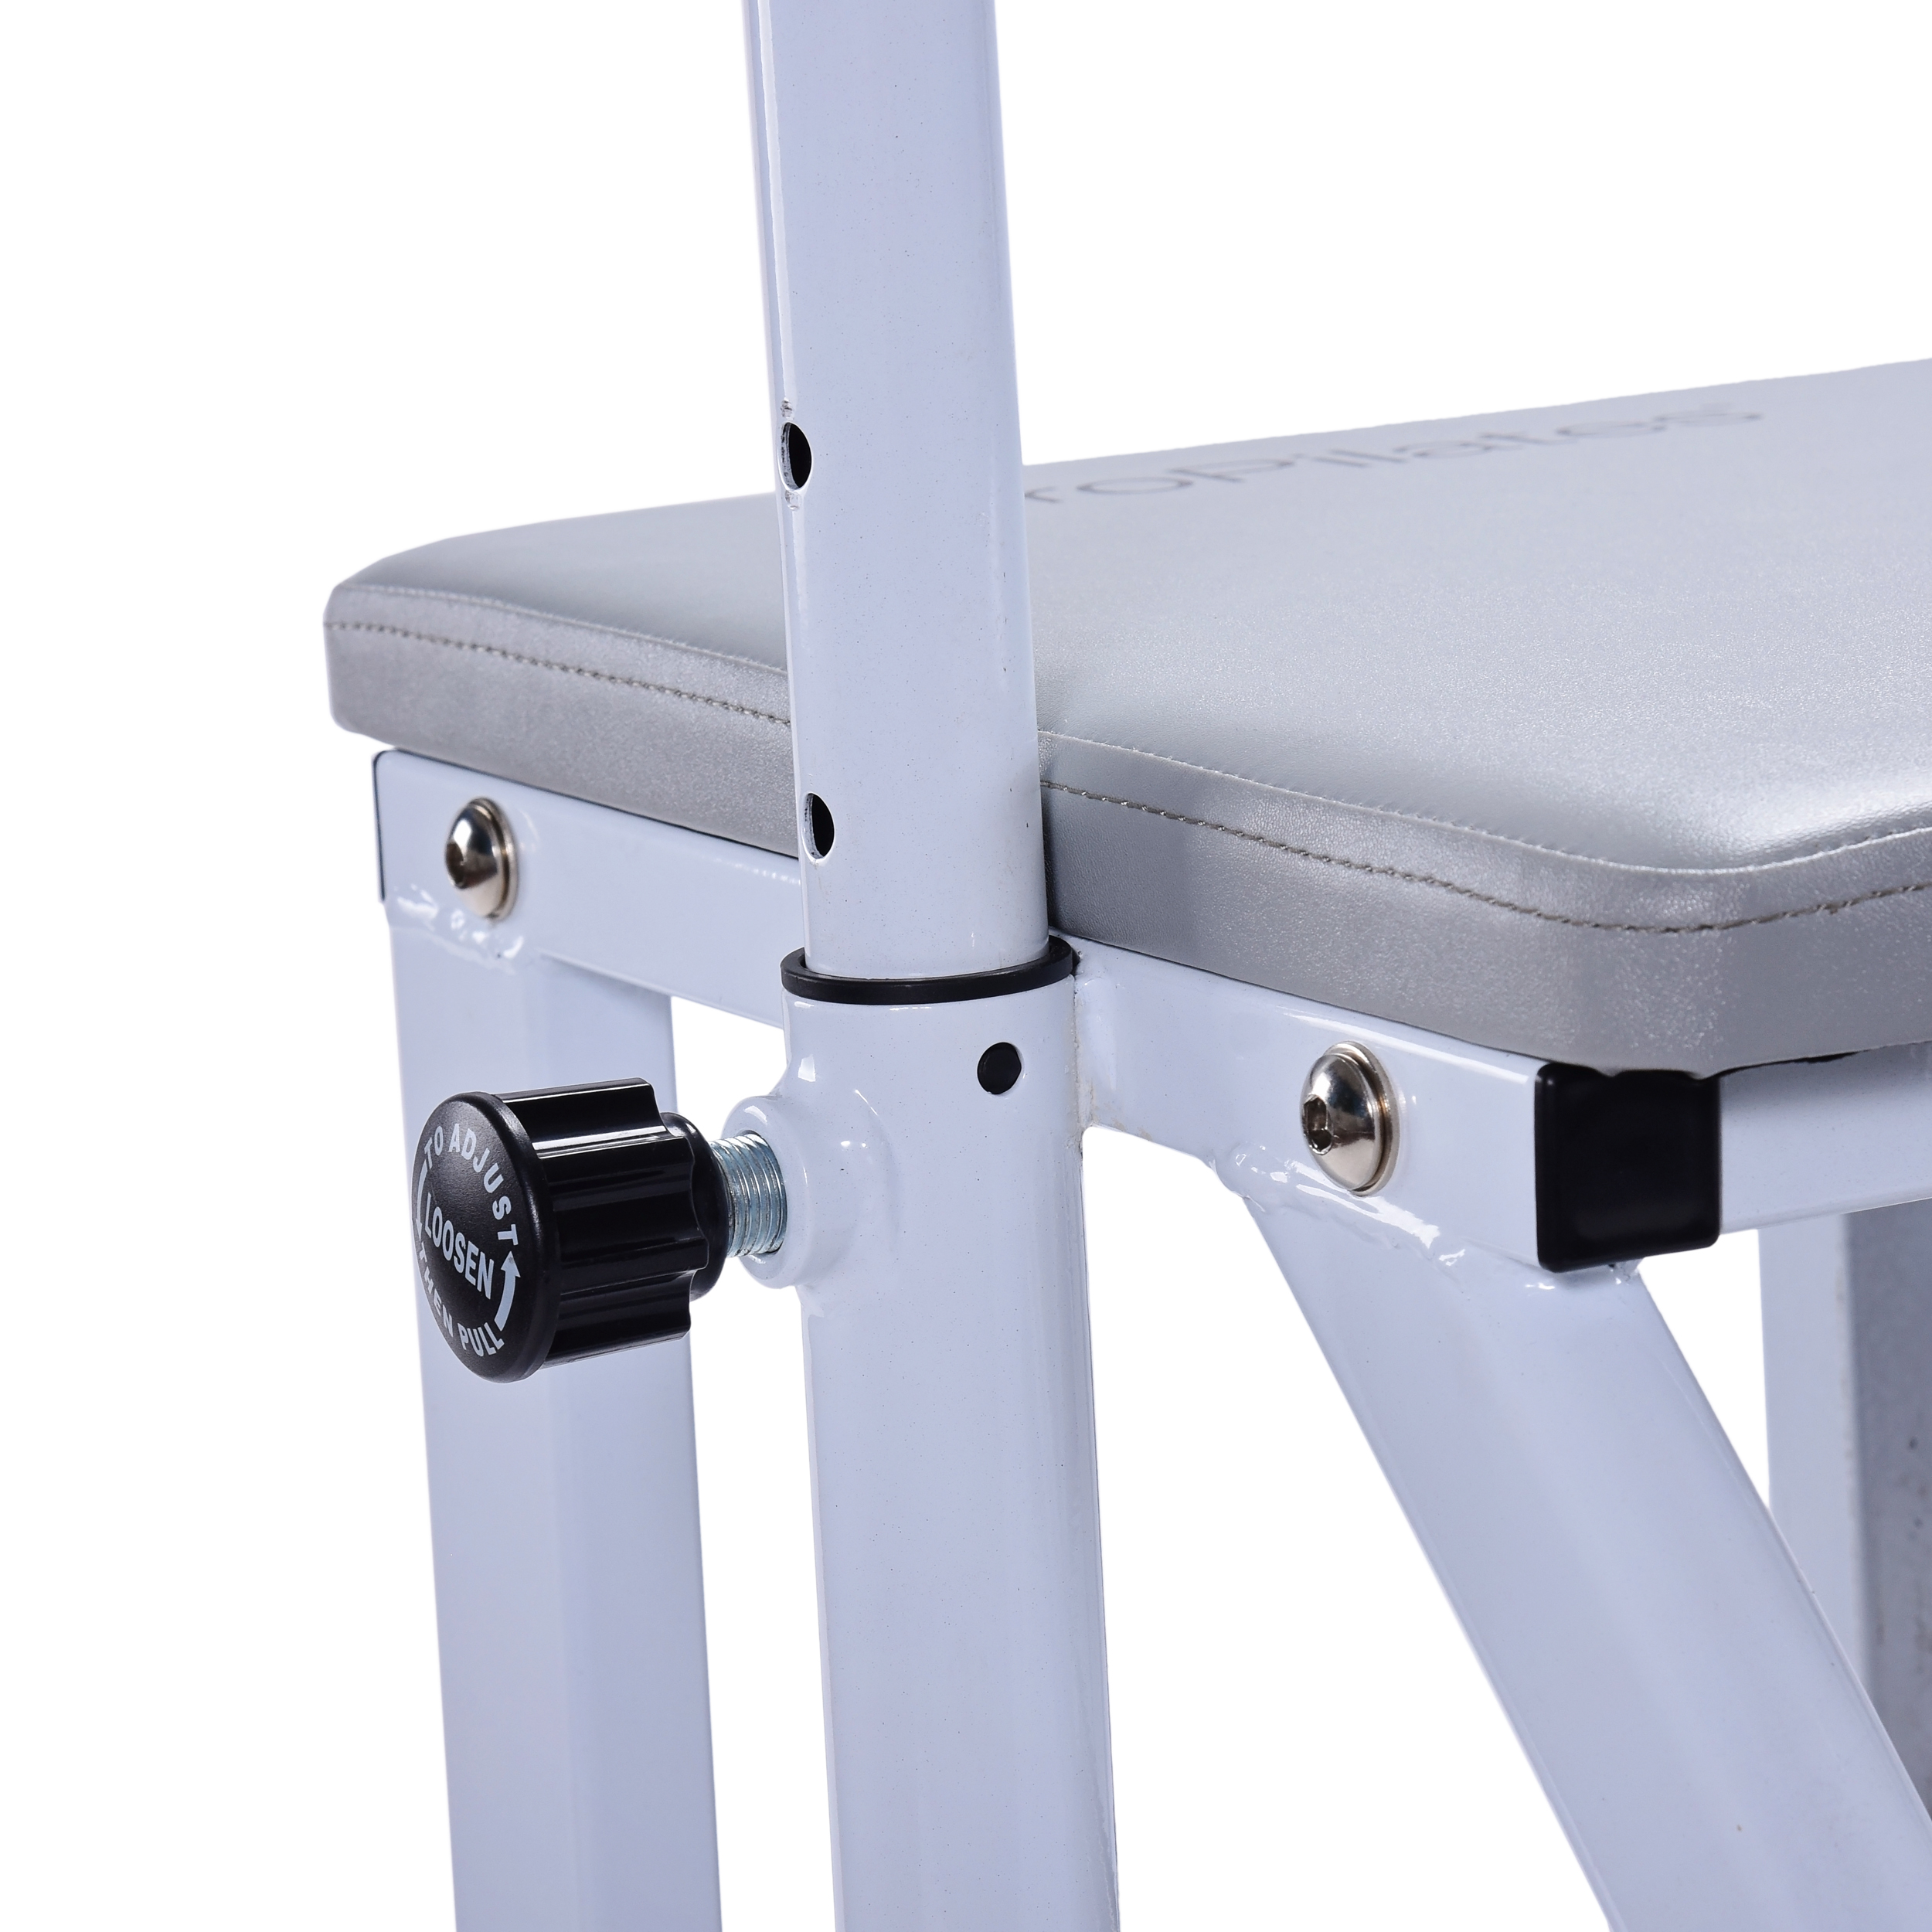 Stamina Products 05-0025 AeroPilates Elevation Box & Pole for Strength,  Balance, 1 Piece - Kroger